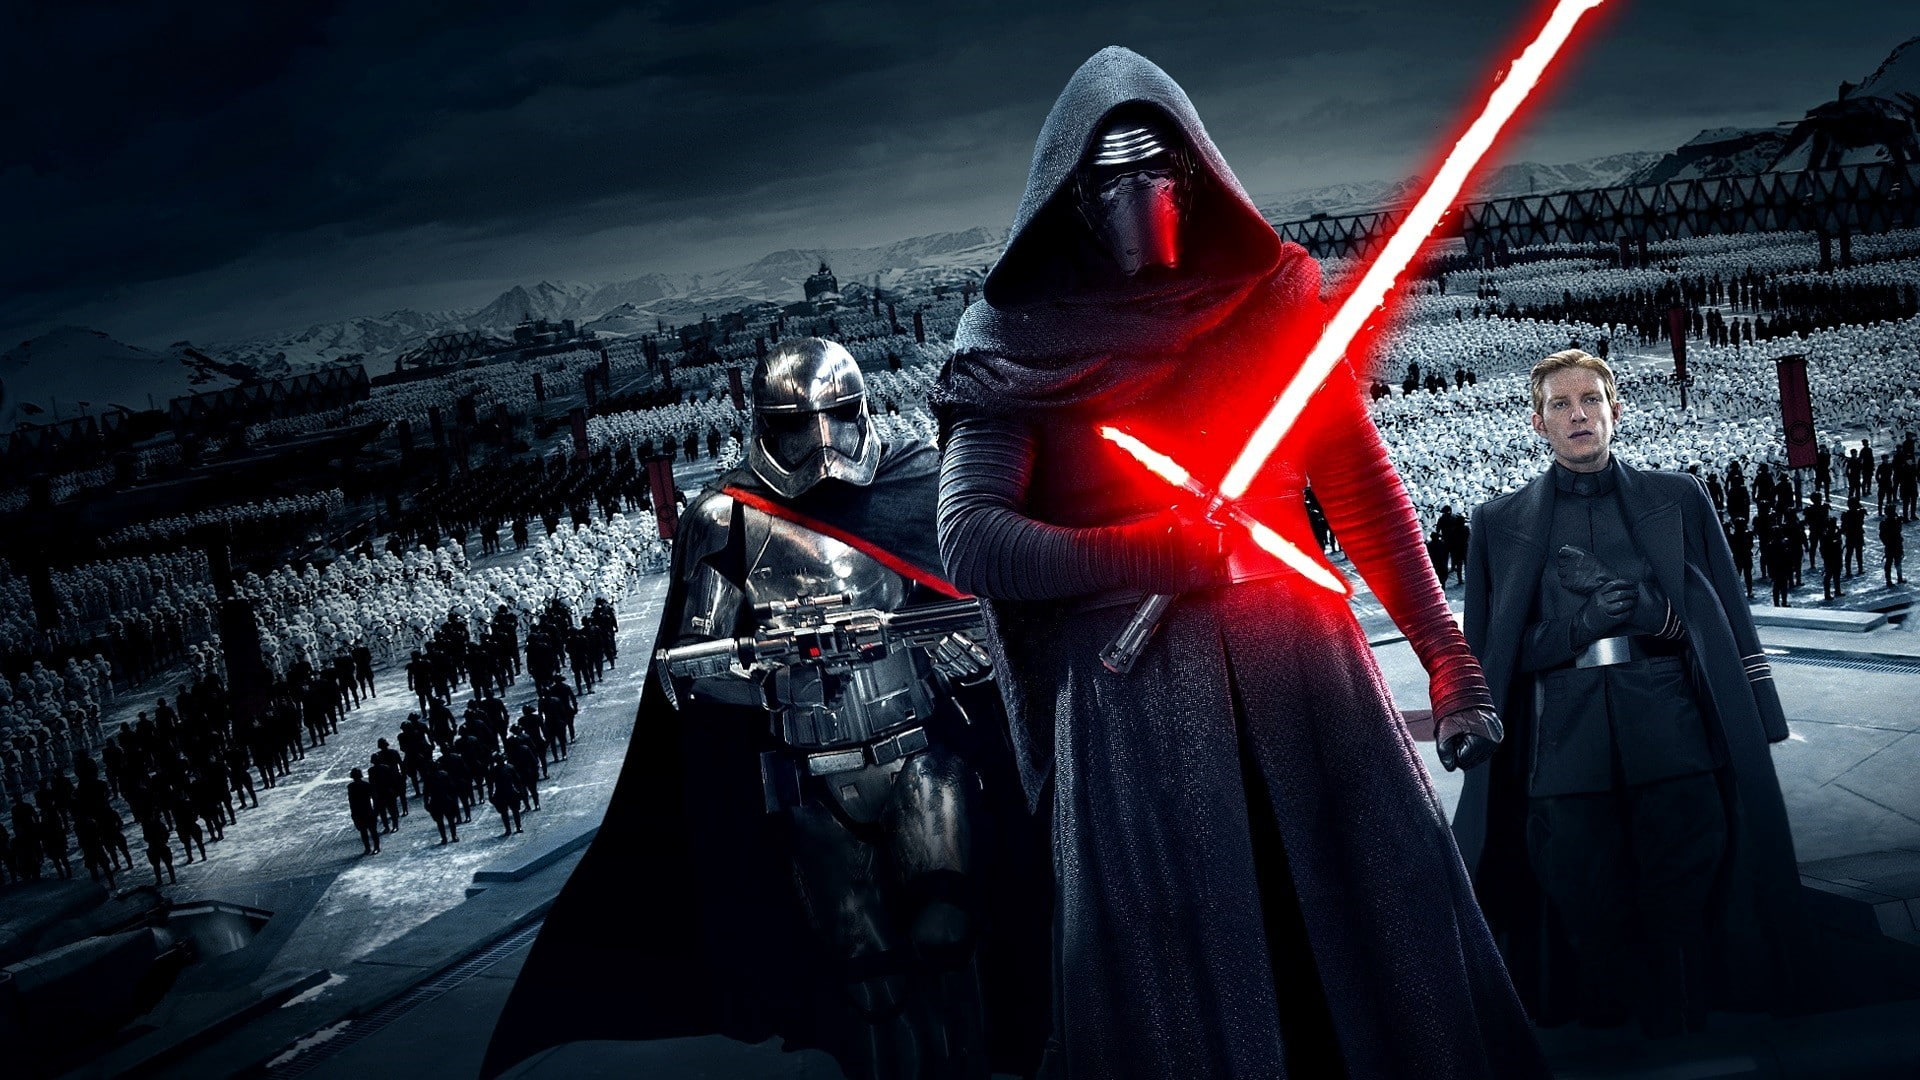 Star Wars, Kylo Ren, Star Wars: The Force Awakens, movies, lightsaber